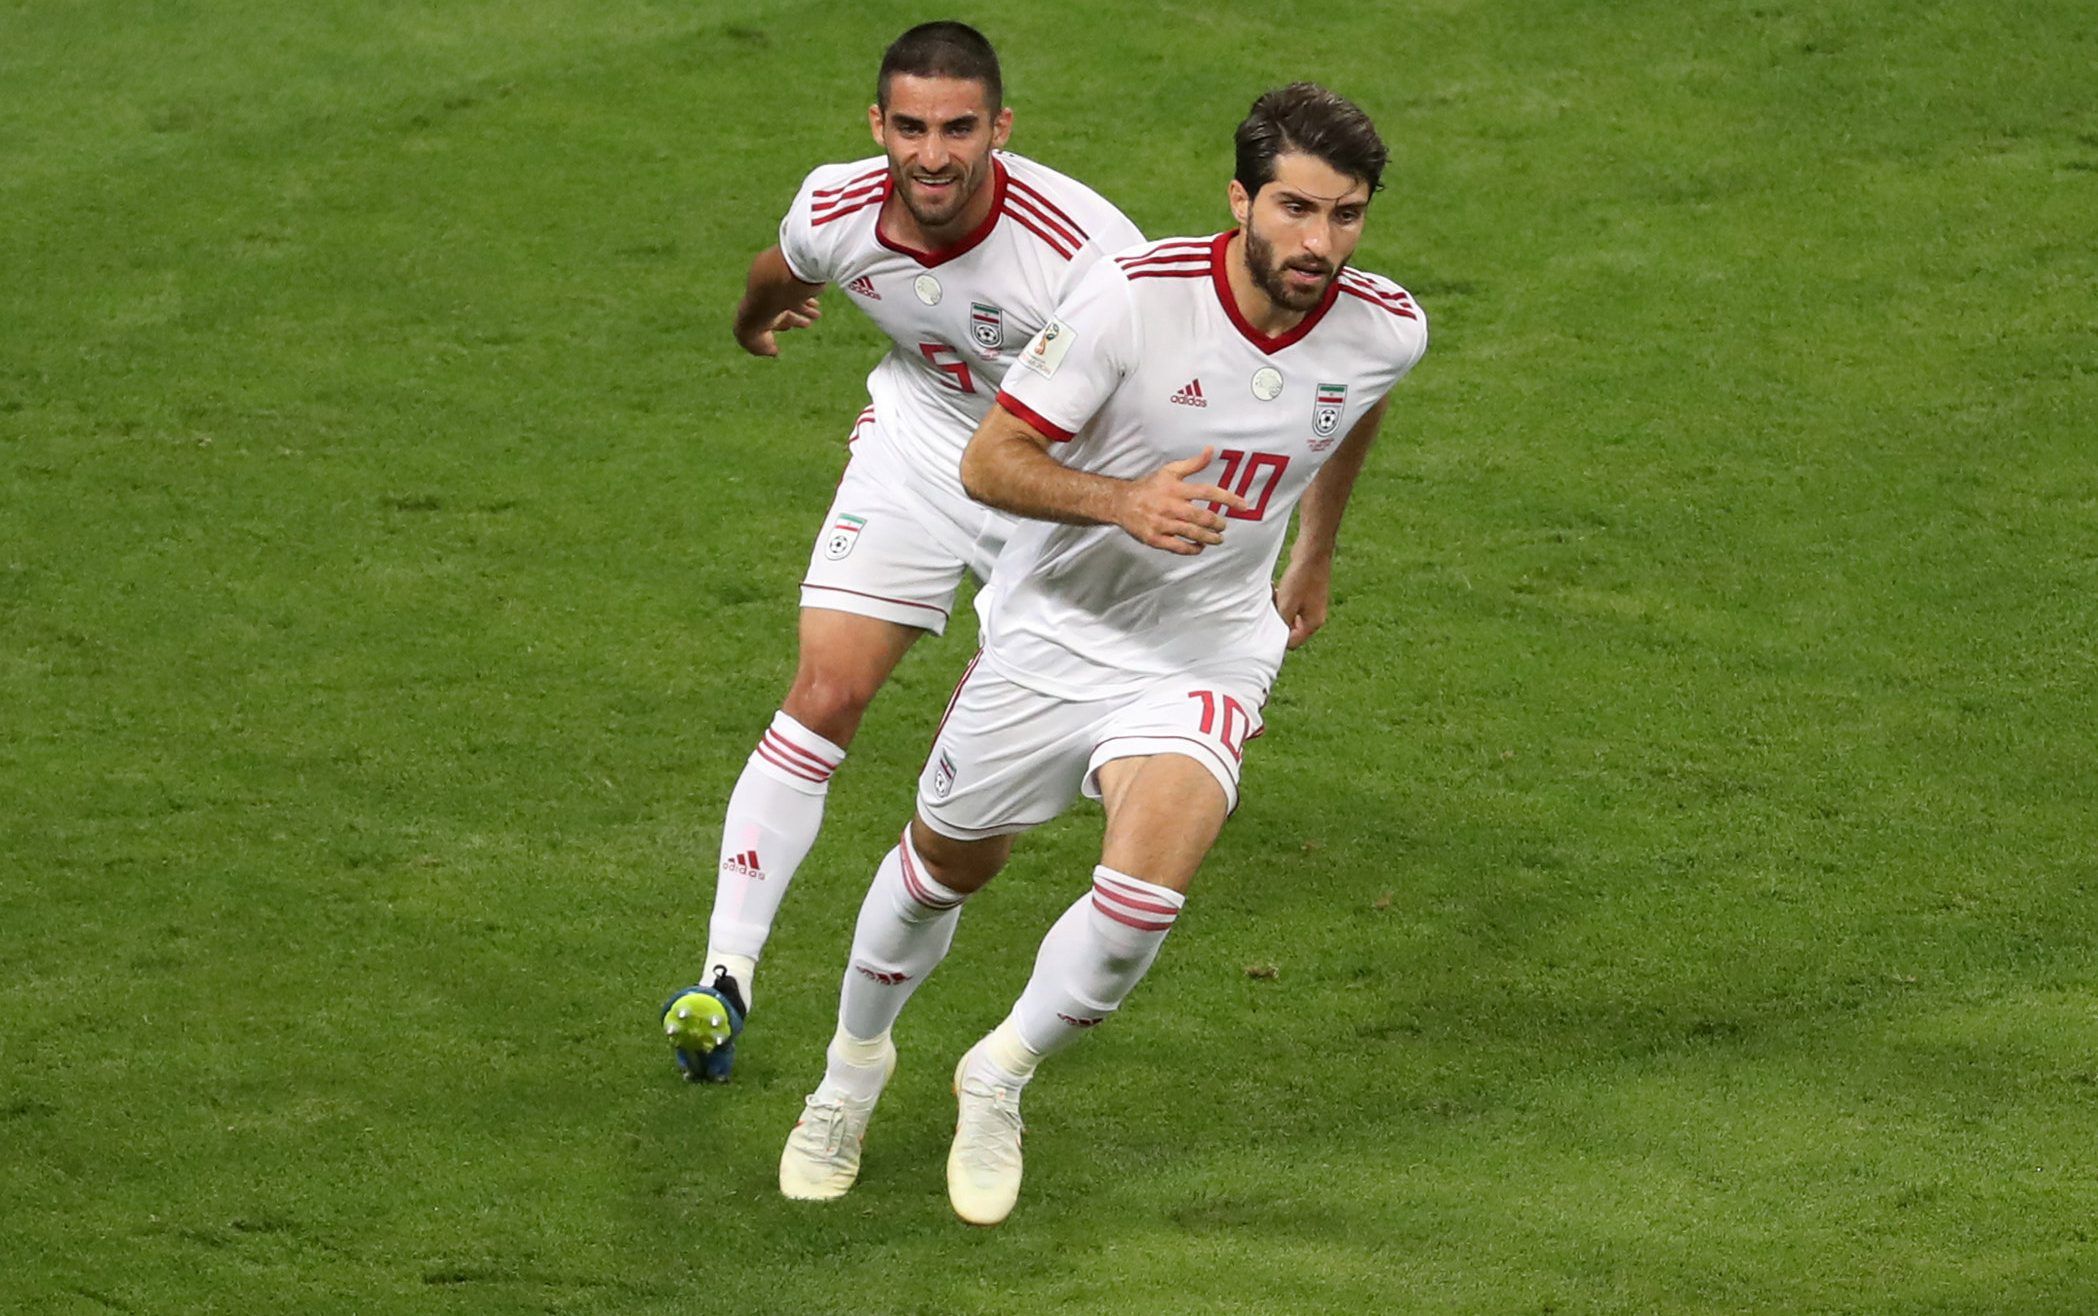 Soccer Football - World Cup - Group B - Iran vs Portugal - Mordovia Arena, Saransk, Russia - June 25, 2018   Iran's Karim Ansarifard celebrates scoring their first goal with Milad Mohammadi    REUTERS/Lucy Nicholson